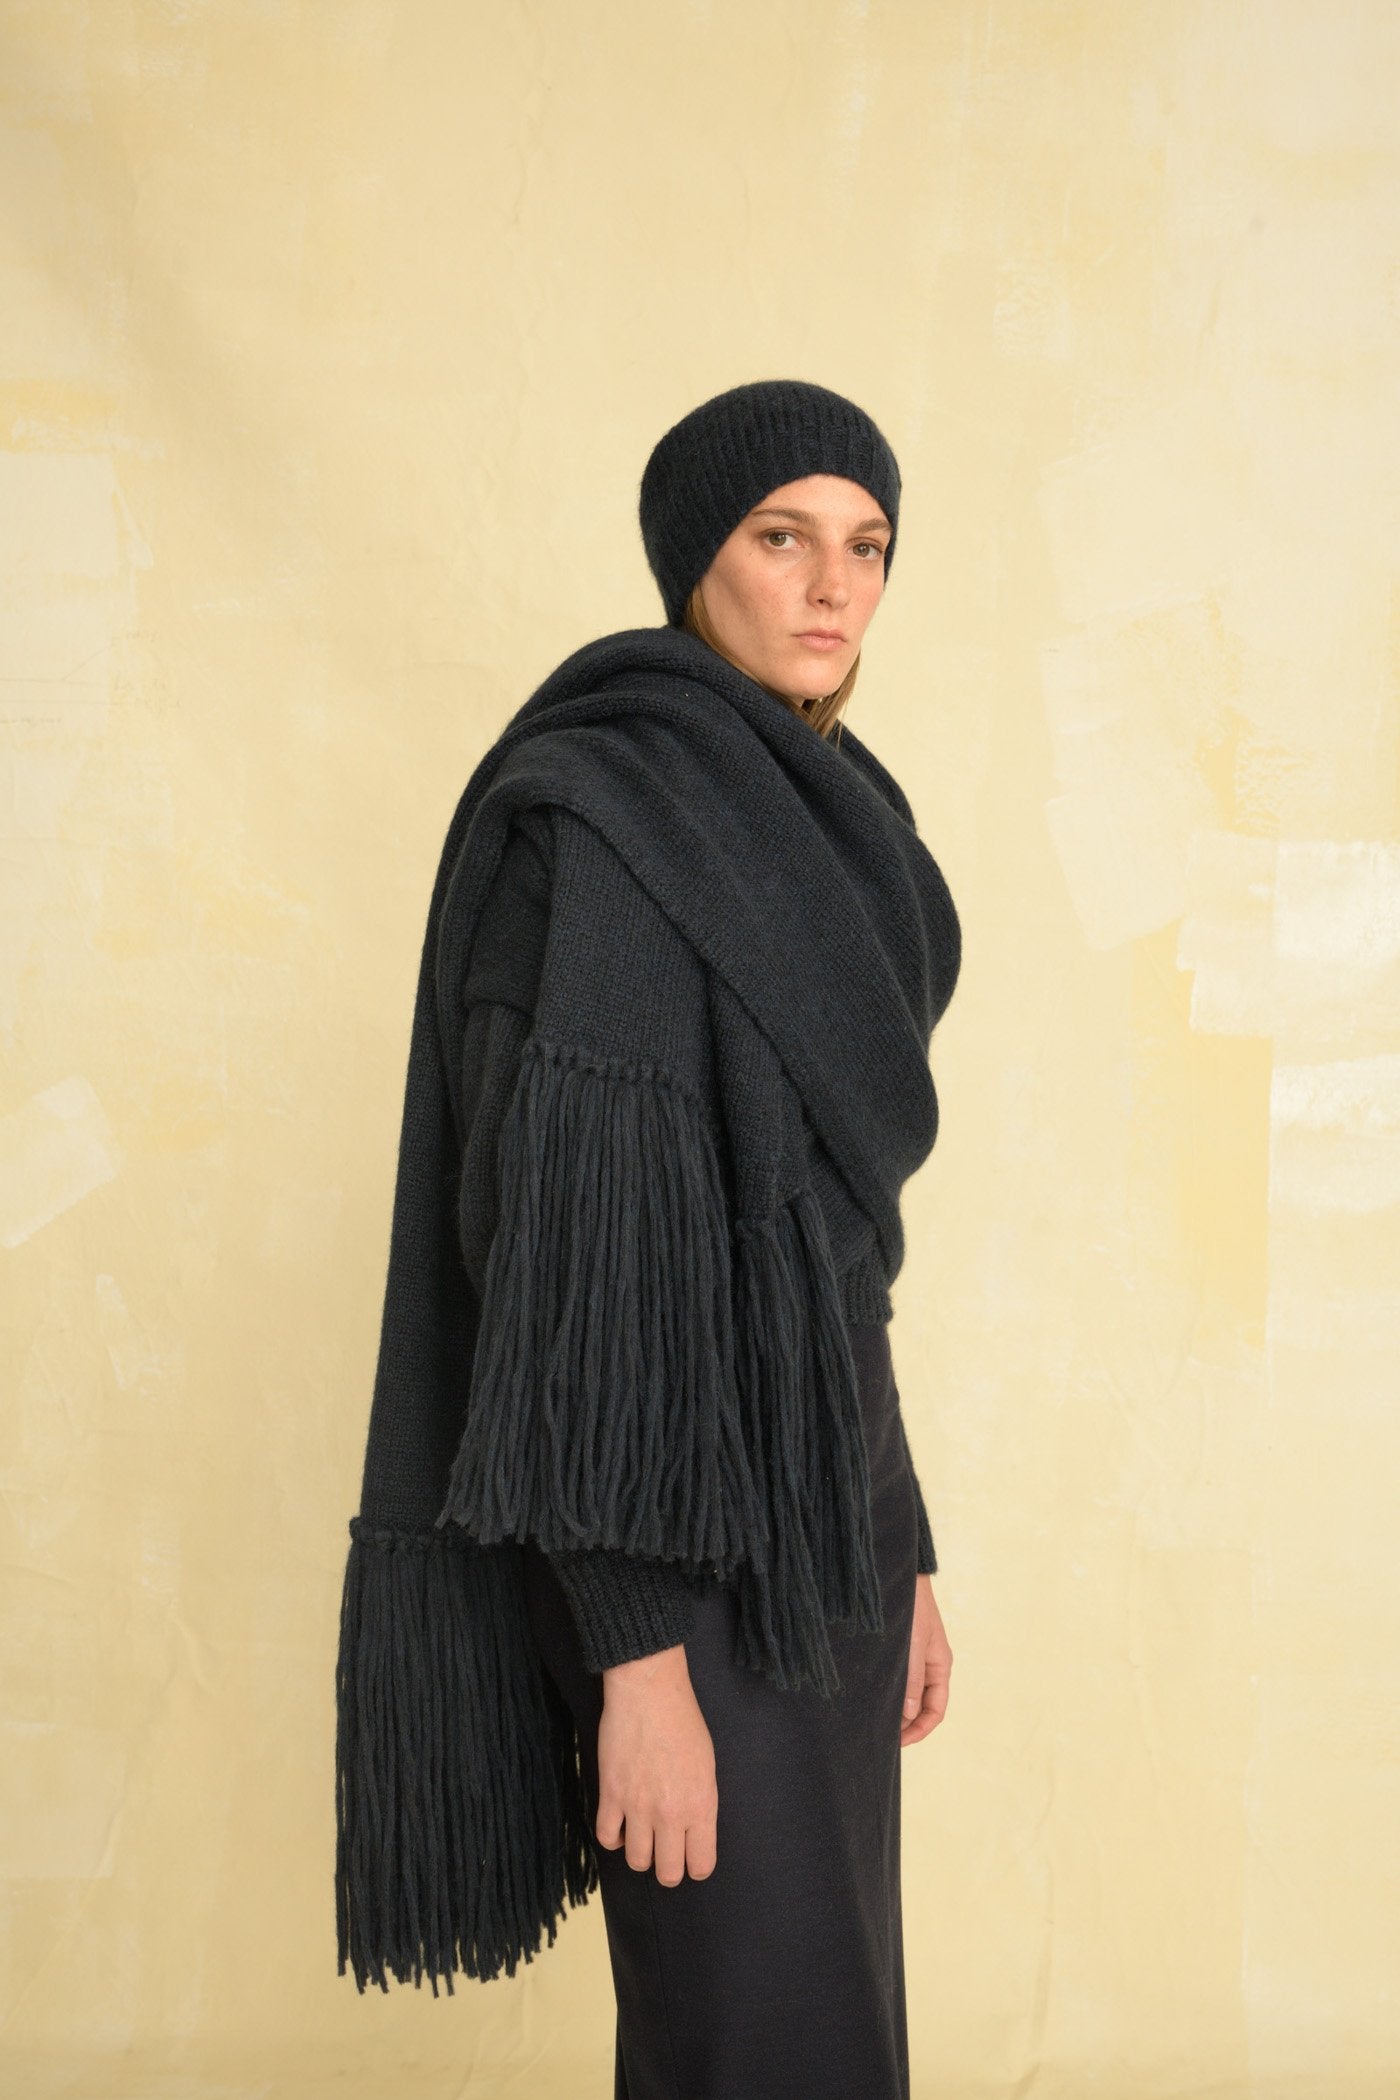 Nusa, beige knitted scarf